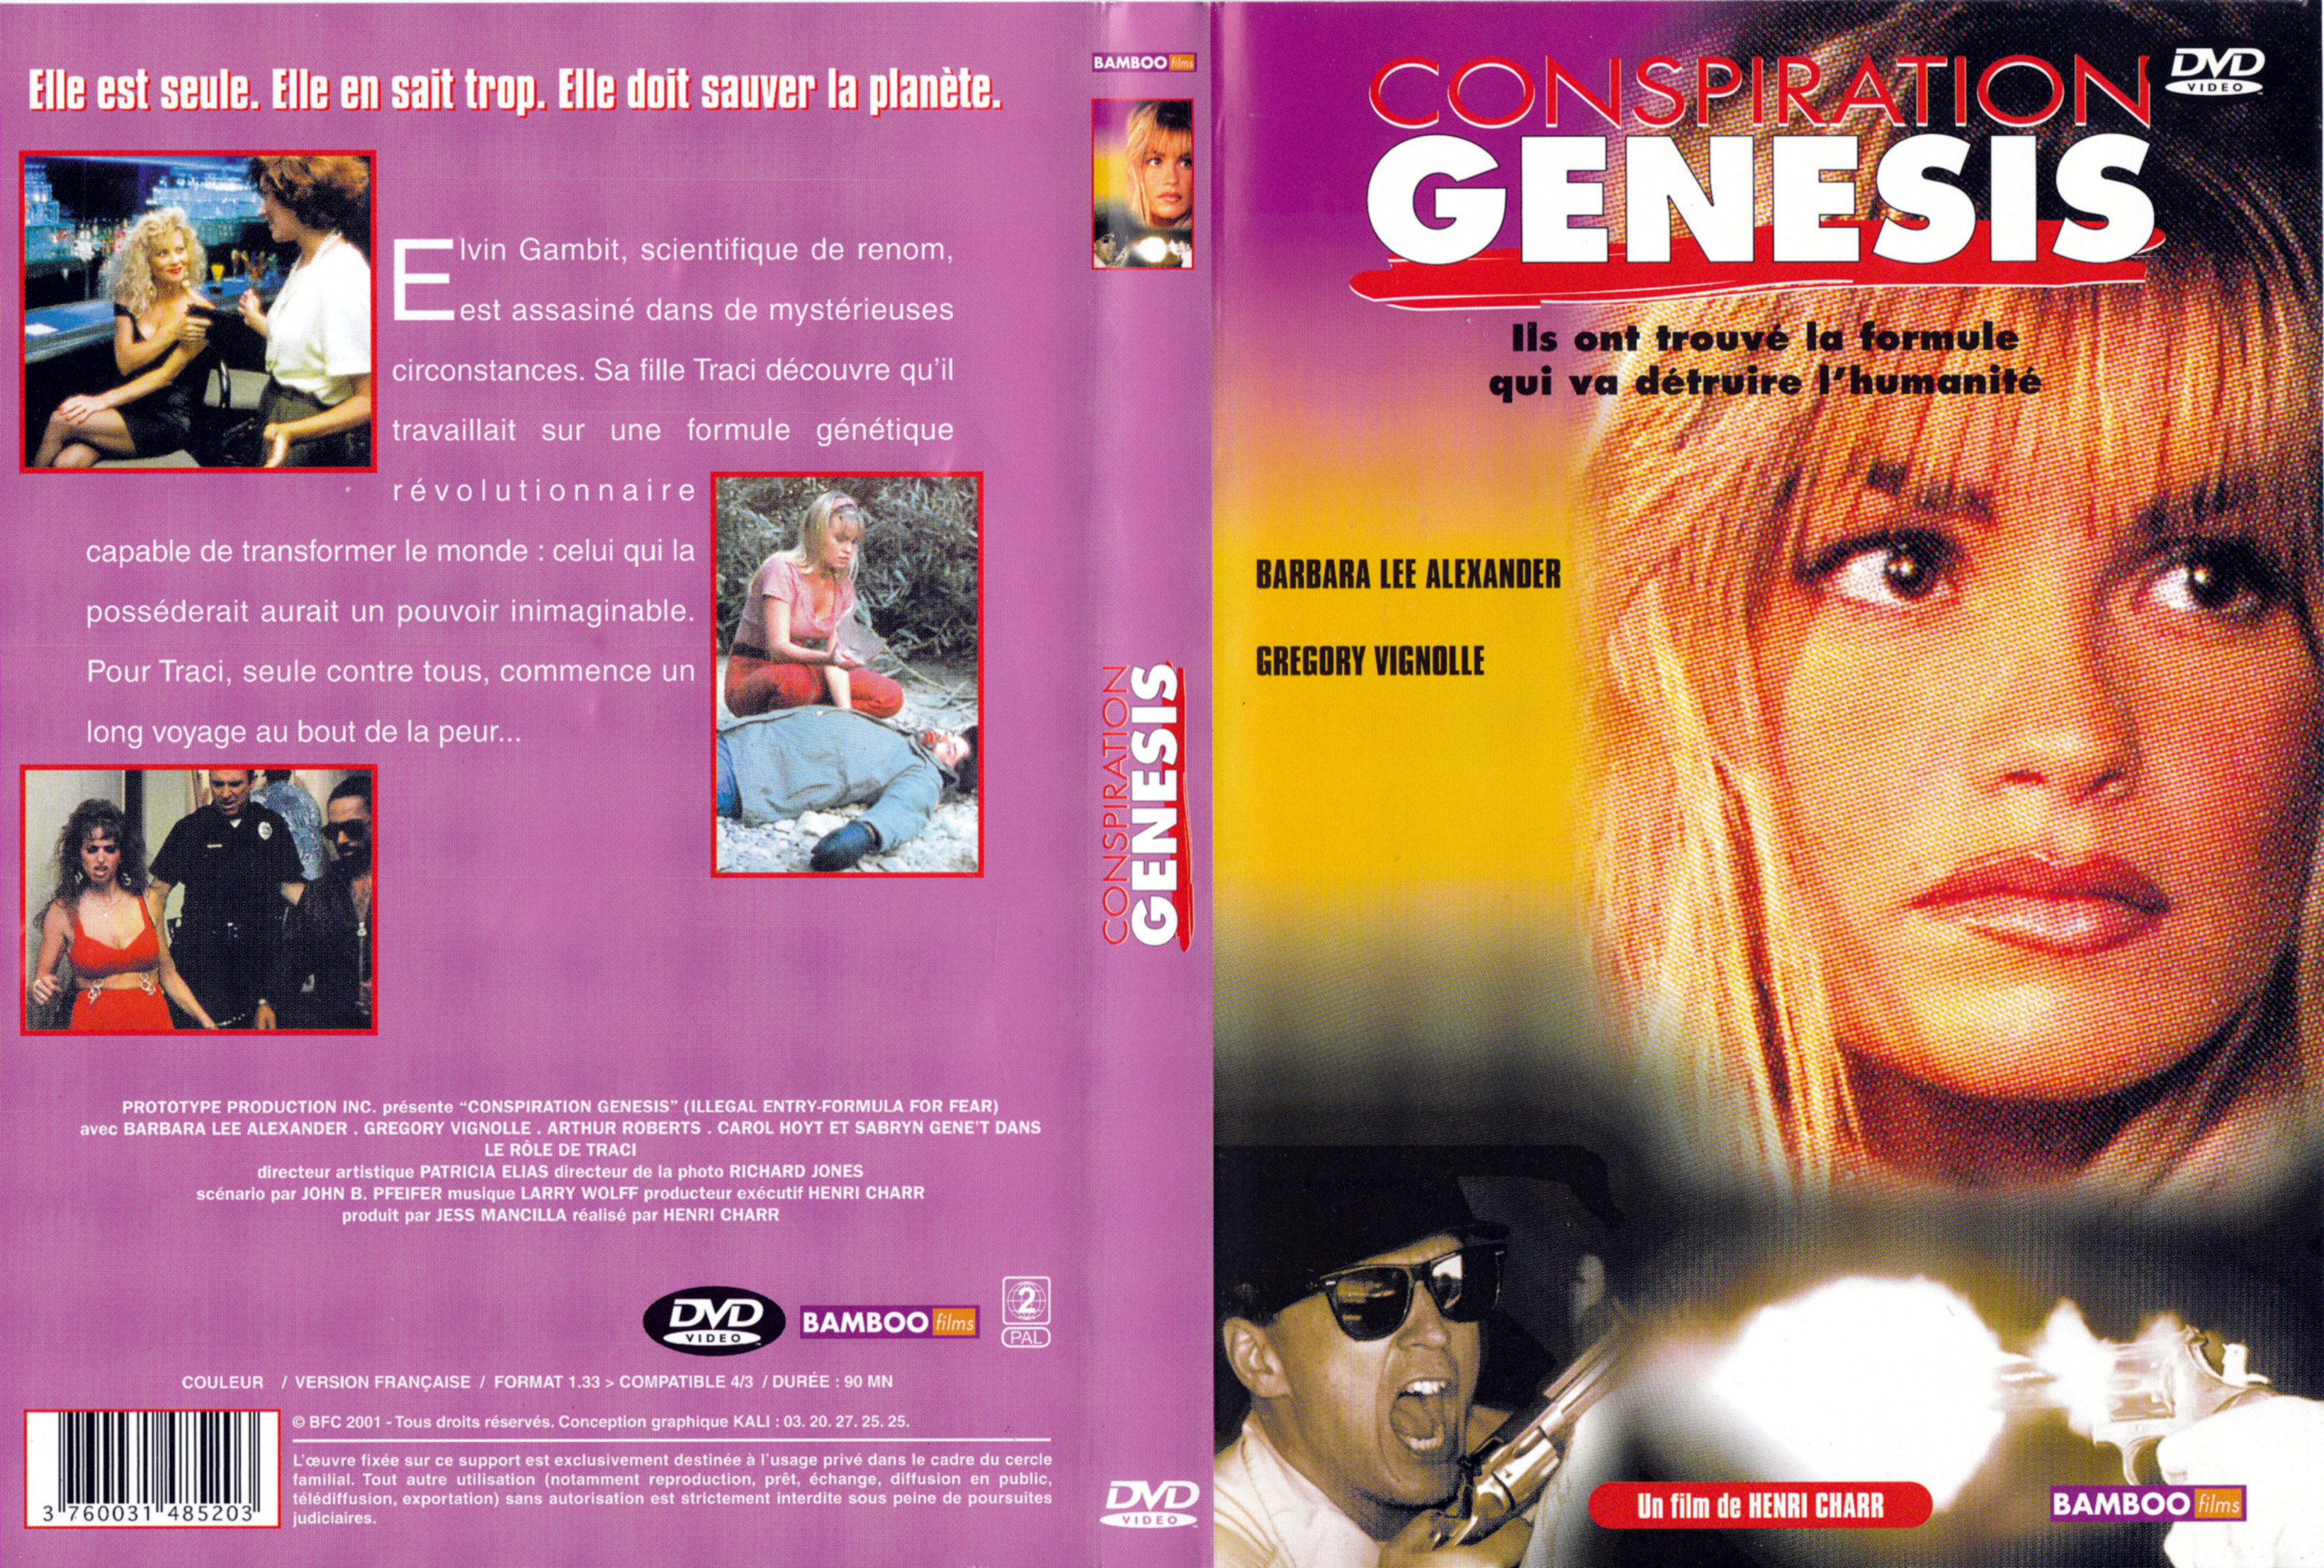 Jaquette DVD Conspiration genesis